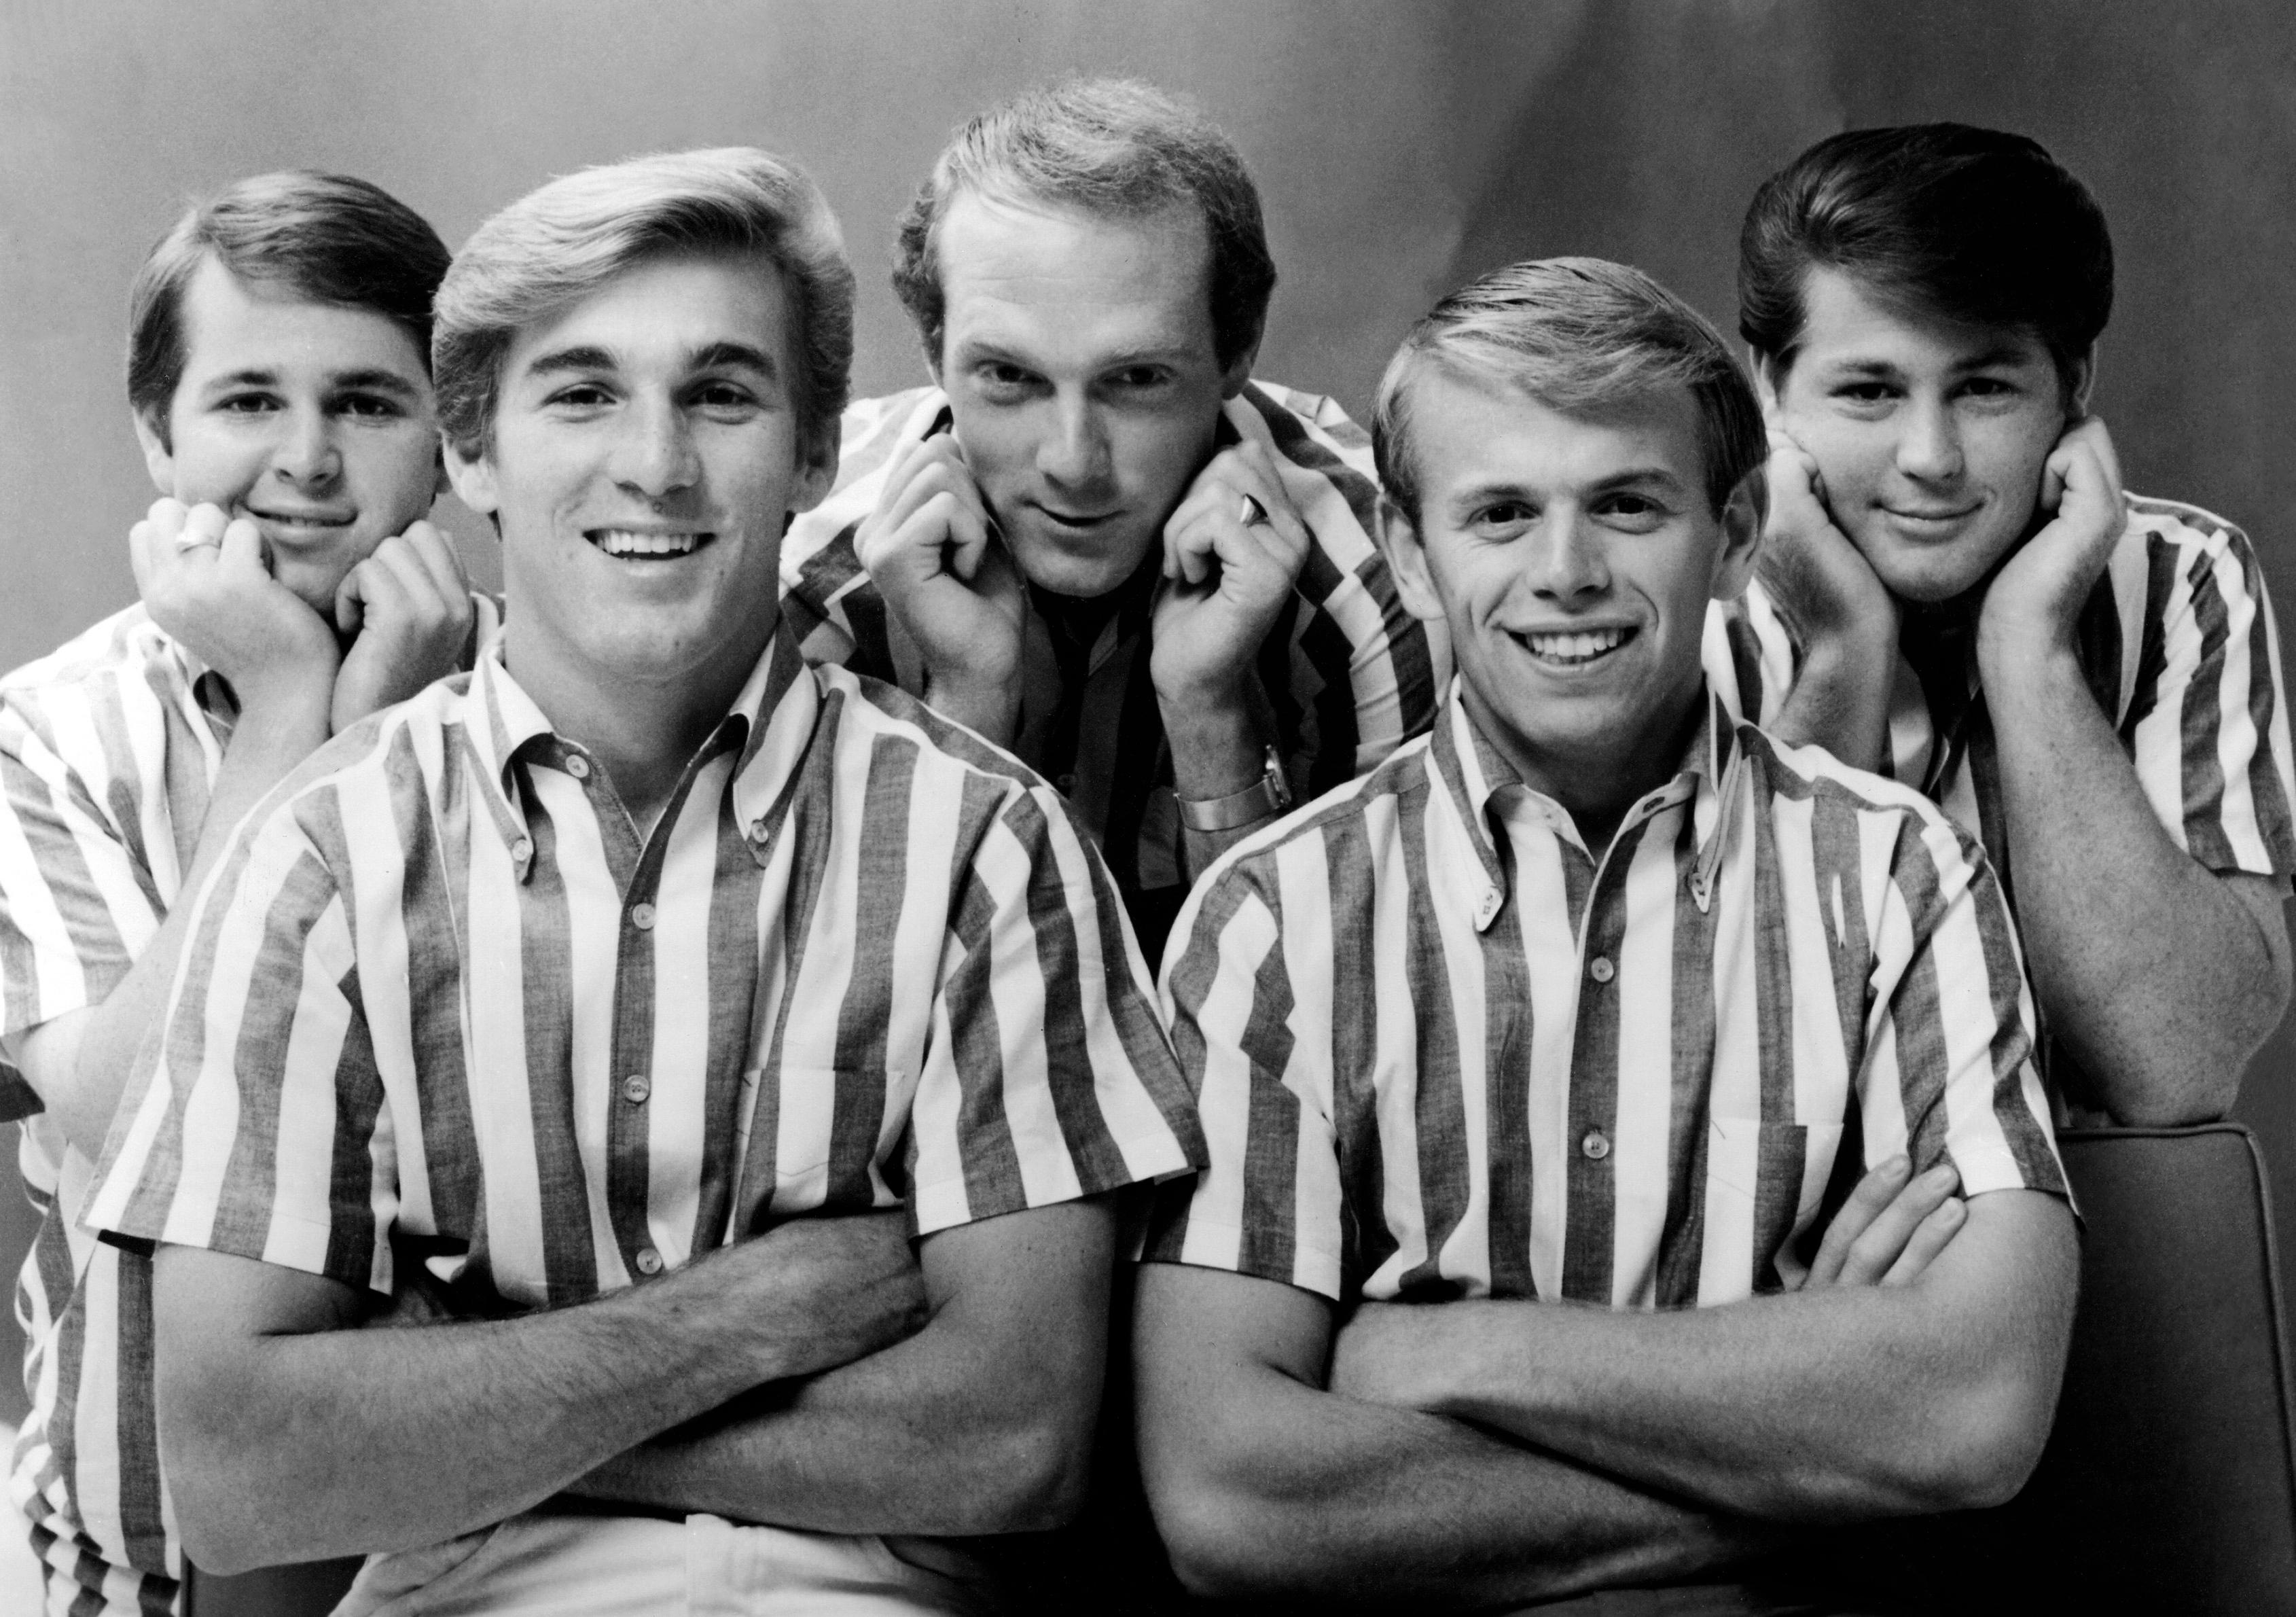 Unknown Black and White Photograph - The Beach Boys in Stripes Globe Photos Fine Art Print